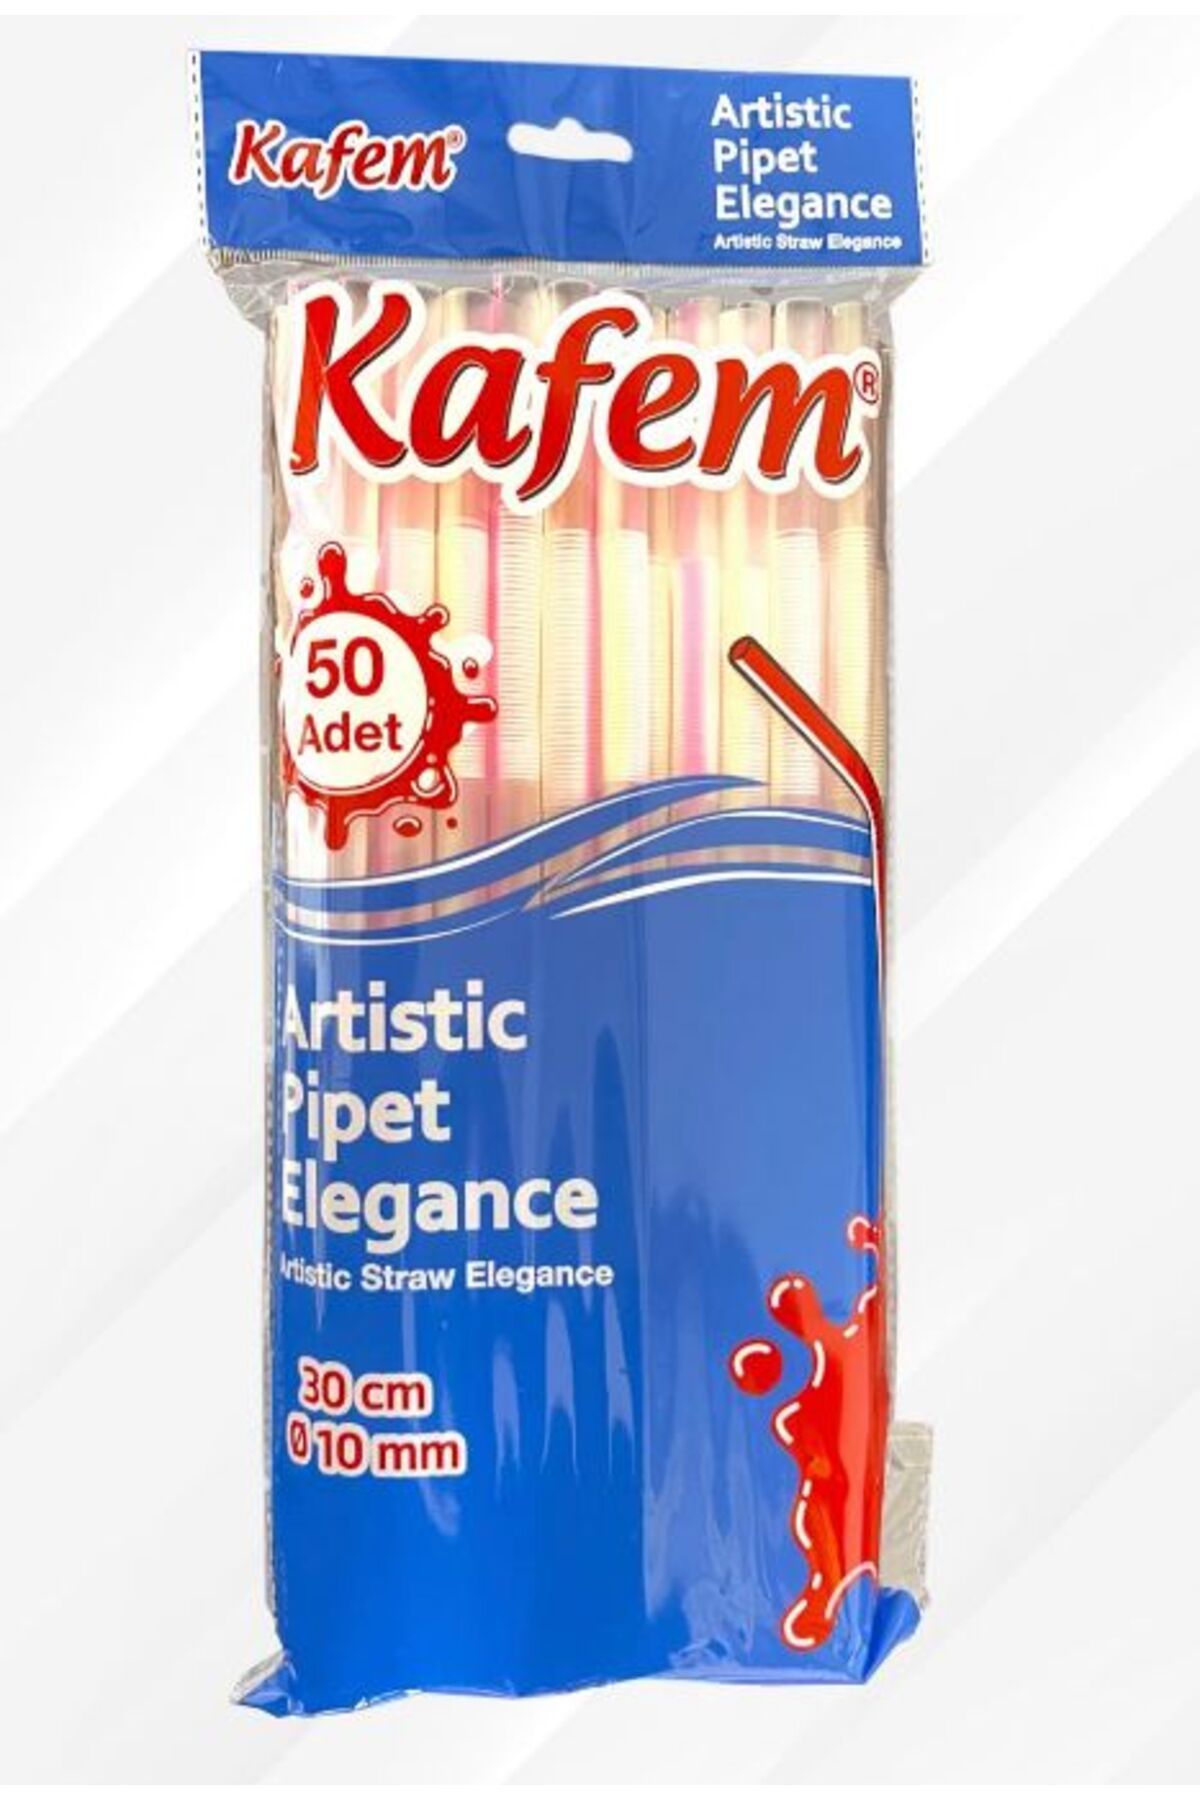 KAFEM Artistik Pipet Elegance 30 cm Q10 mm 50 li X 5 Paket - Kafem